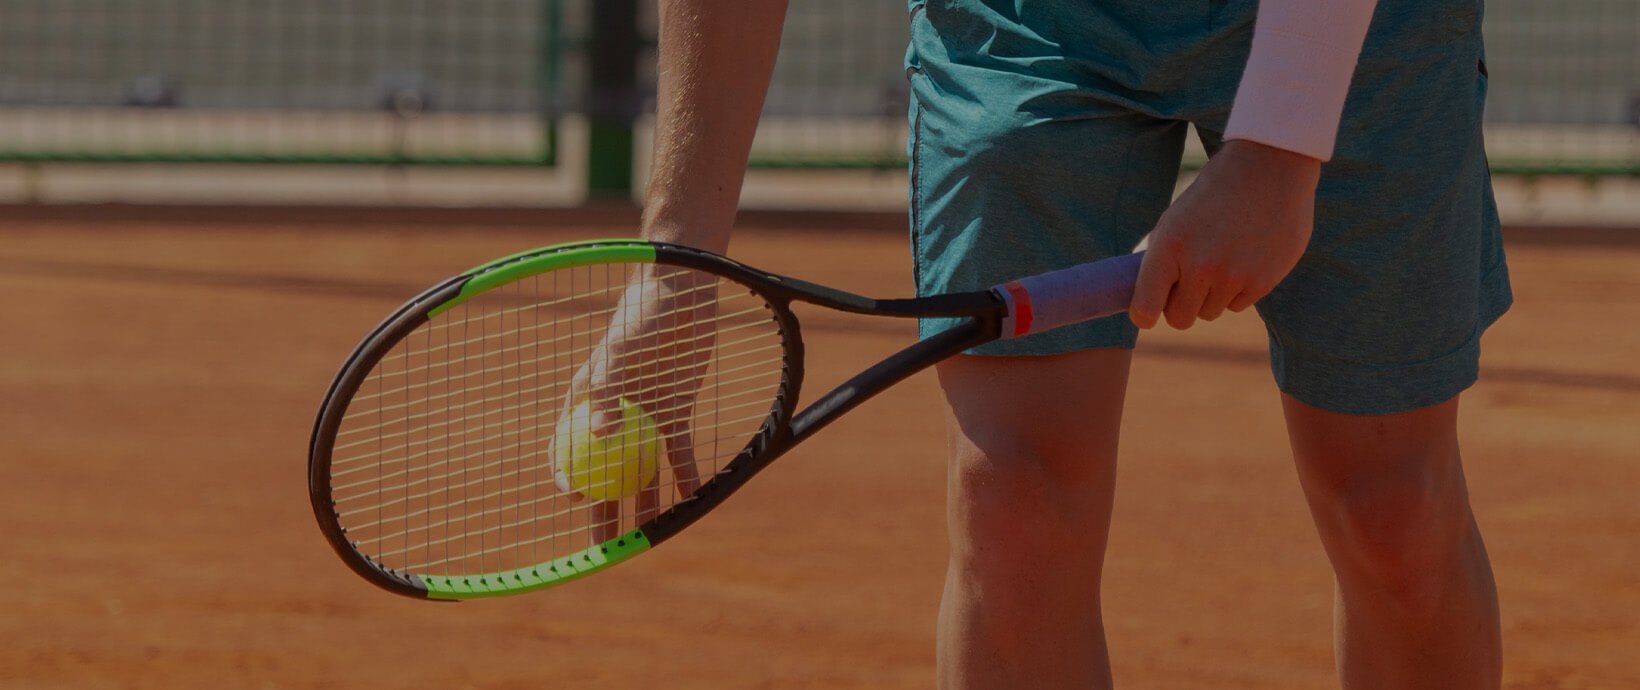 Digital Debunking: Can You Make an Unbreakable Tennis Racket?